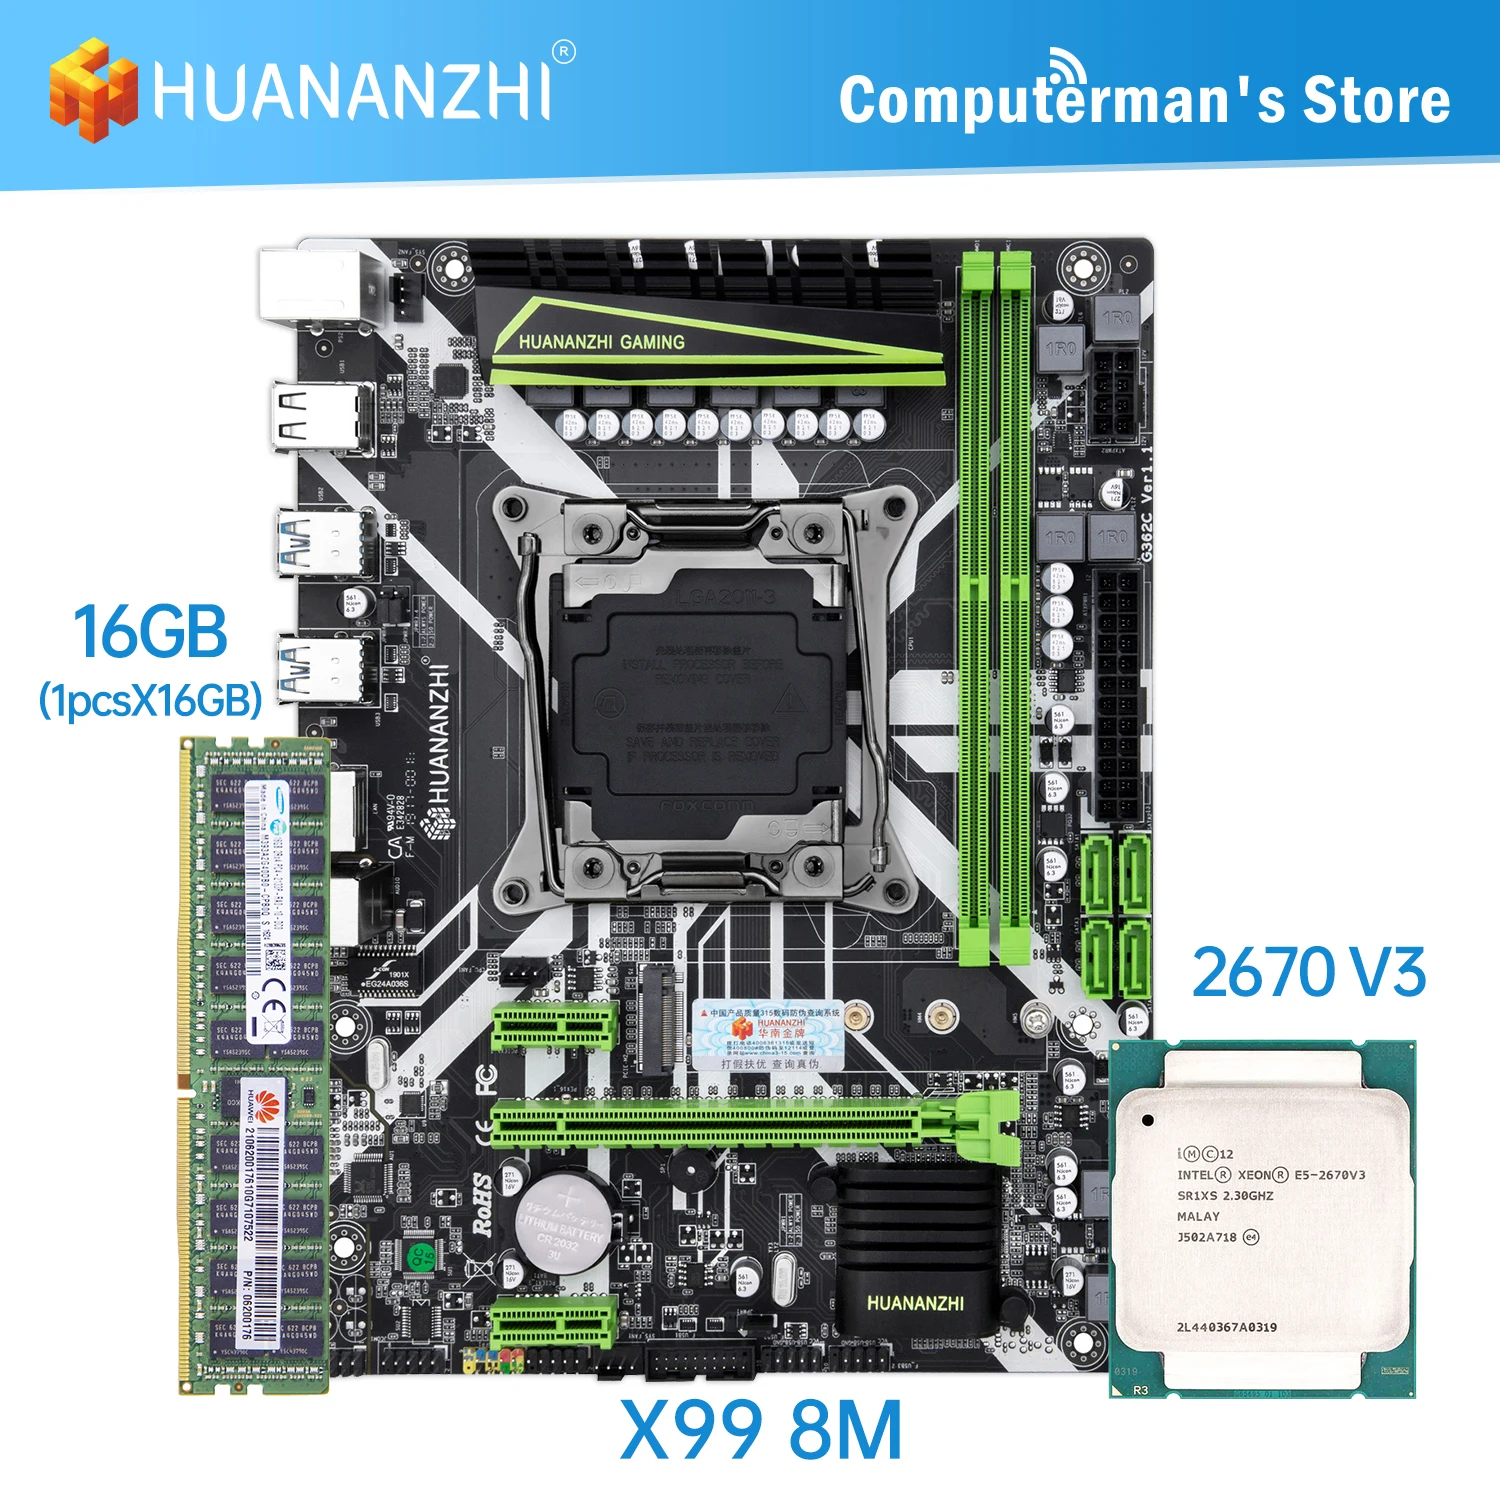 

HUANANZHI X99 8M D4 Motherboard combo kit set CPU Intel XEON E5 2670 V3 Memory 1*16G DDR4 ECC memory M.2 NVME USB3.0 ATX